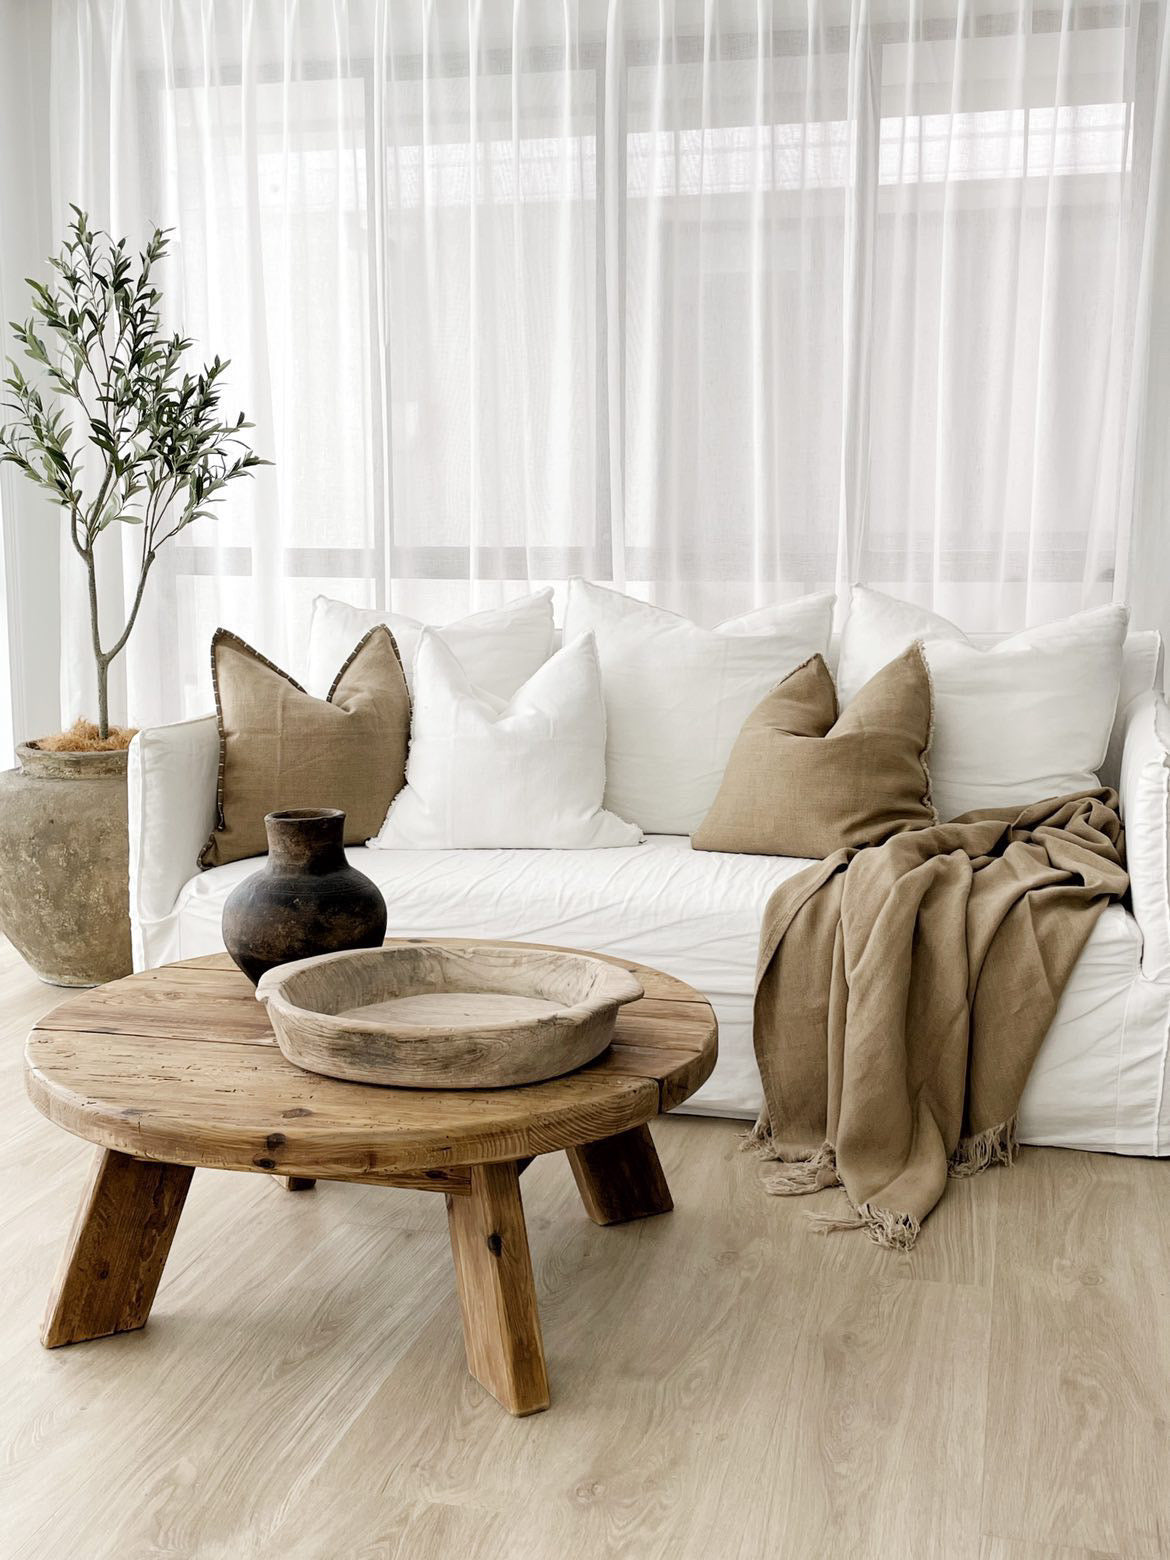 Aspire Stonewashed Linen Cushion - White Wander & Wild 